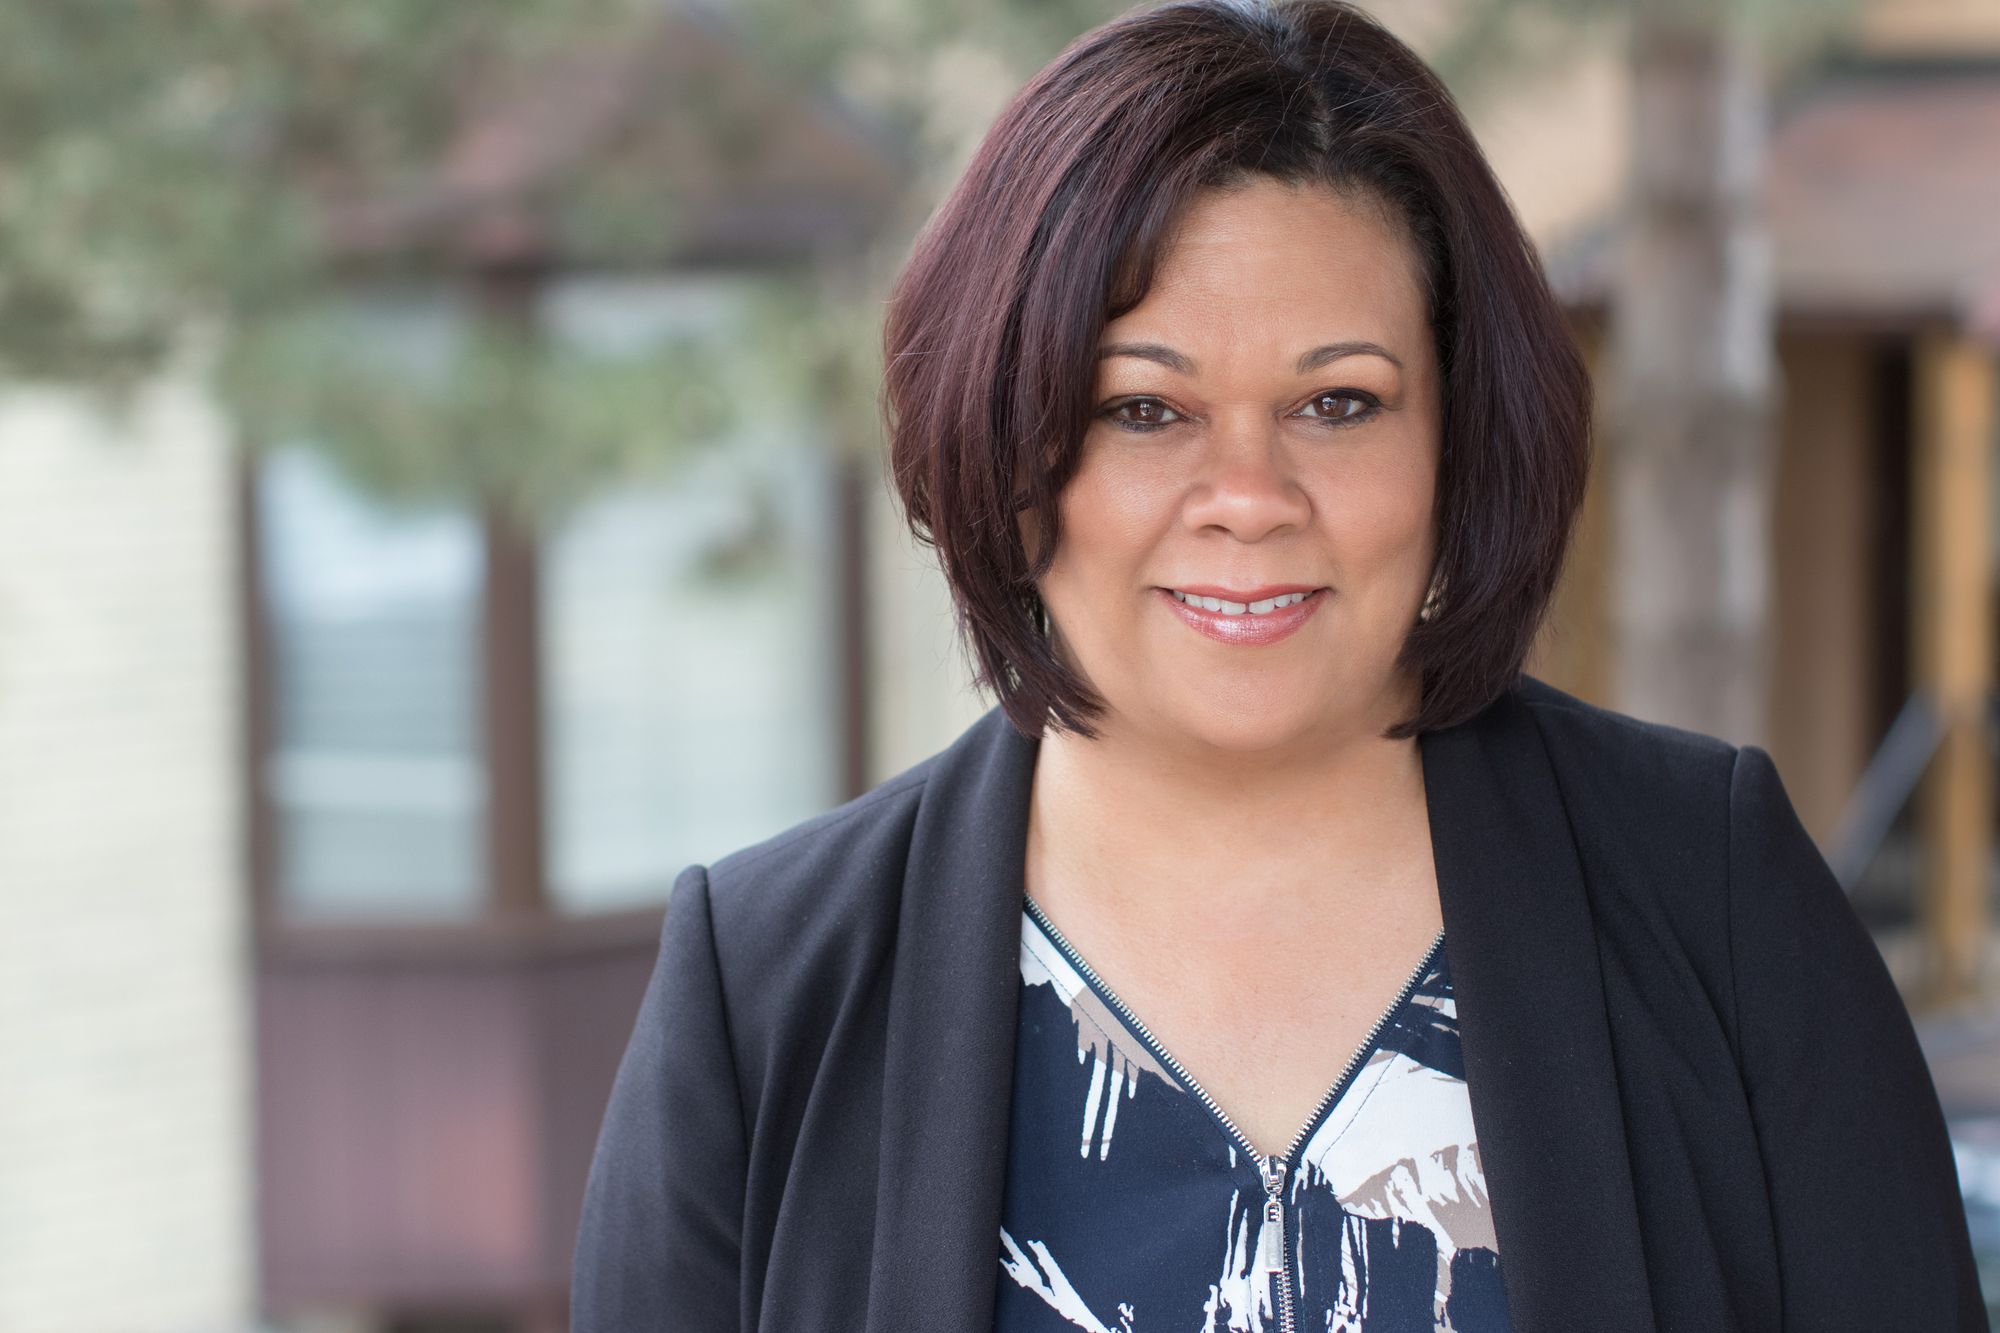 Teaching in Trinidad to running an Ontario paralegal firm: Amanda Edwin